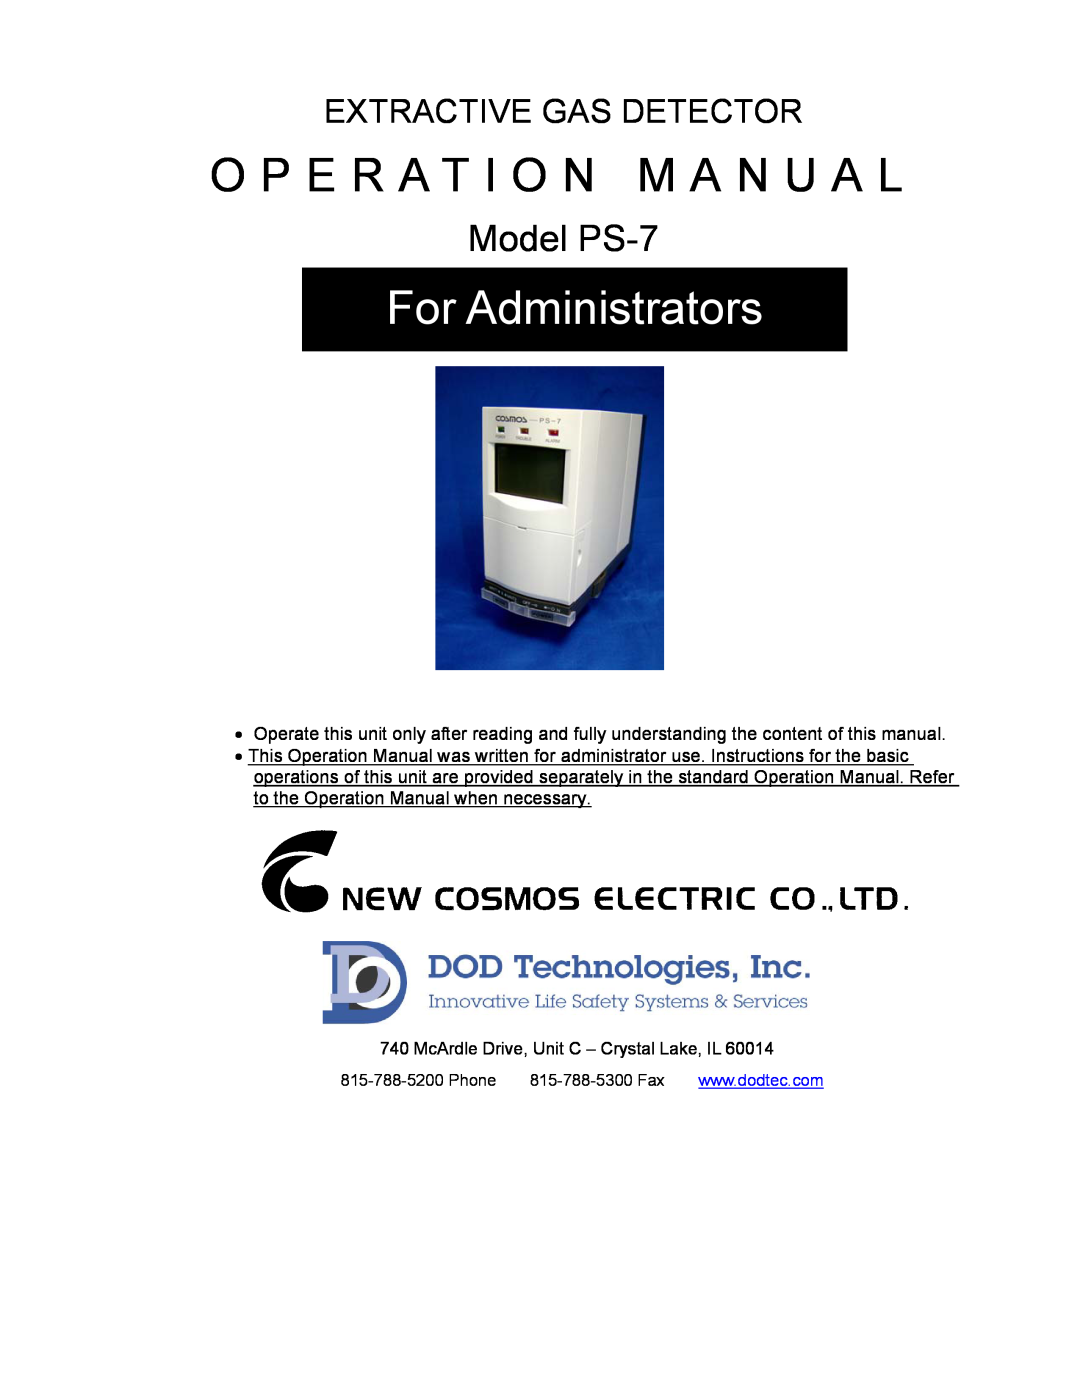 DOD operation manual O P E R A T I O N M A N U A L, For Administrators, Model PS-7, Extractive Gas Detector 